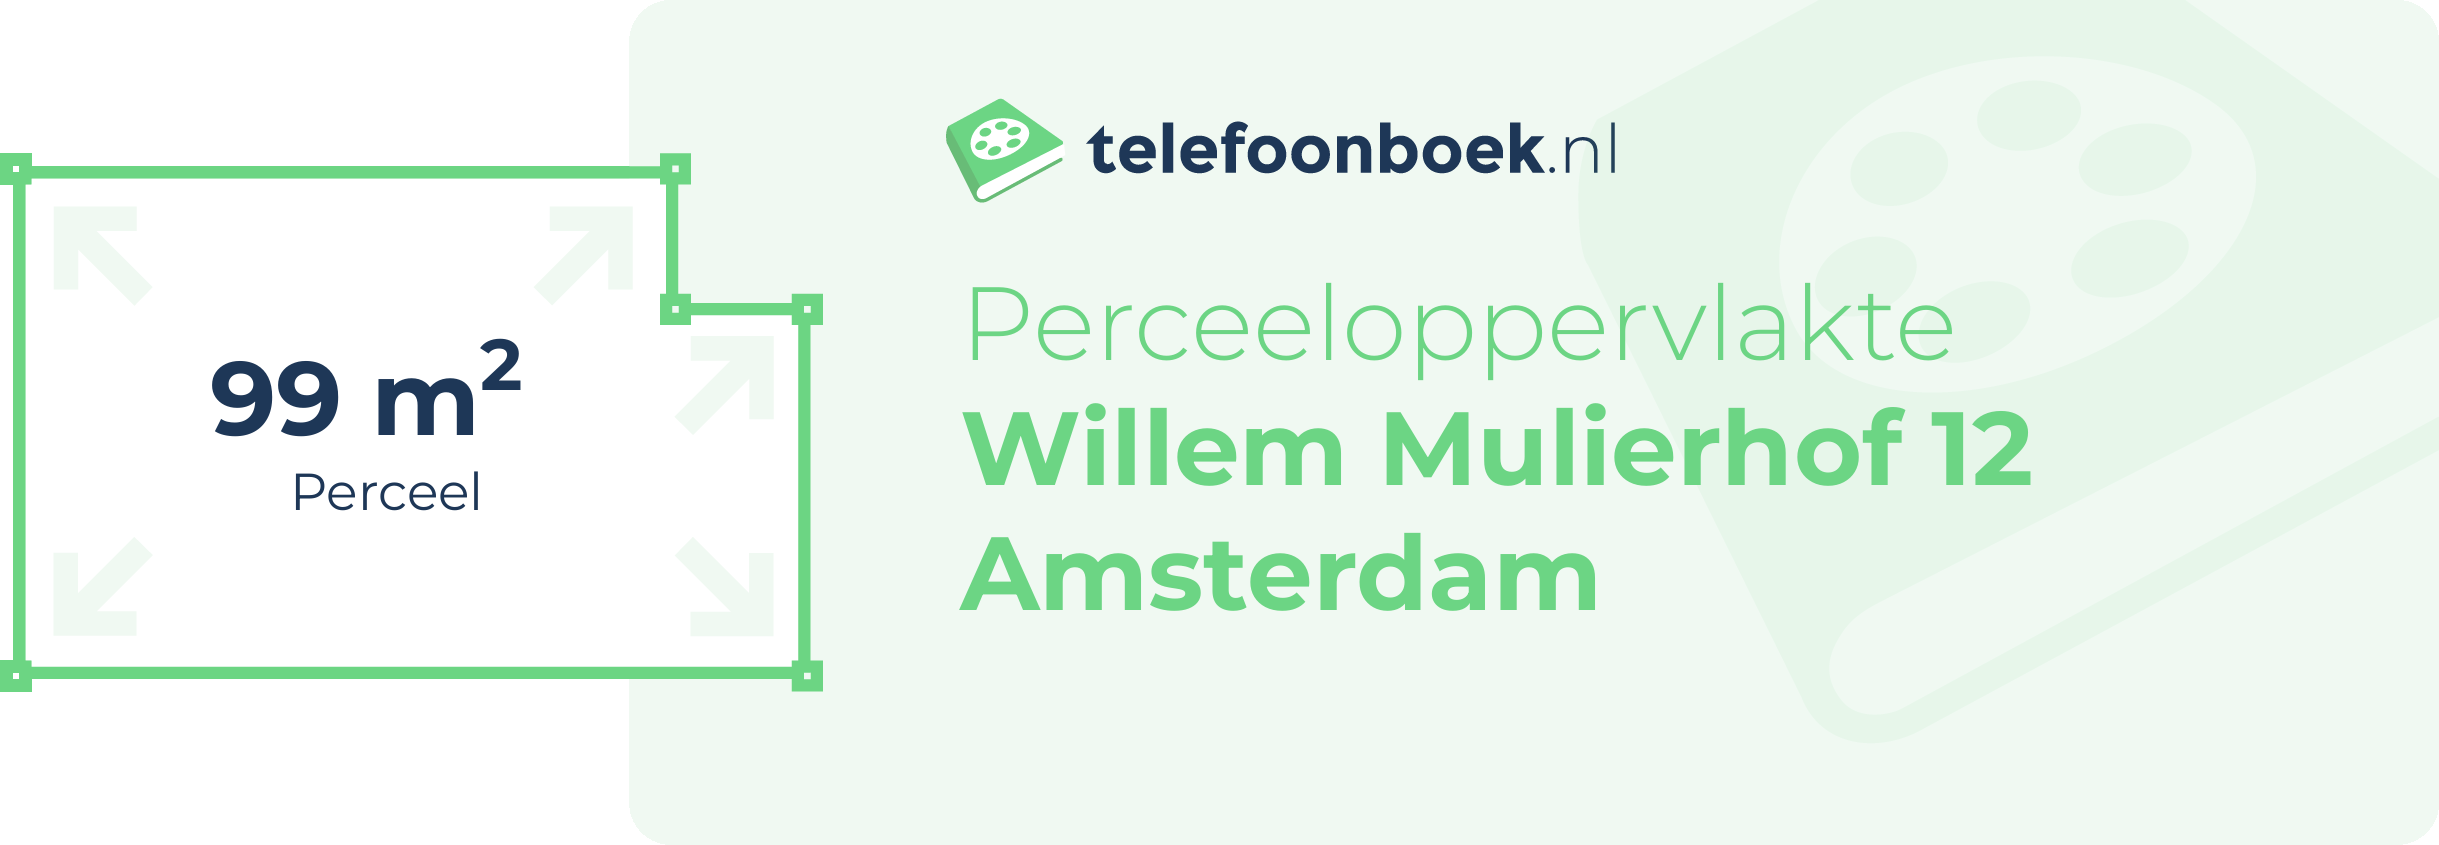 Perceeloppervlakte Willem Mulierhof 12 Amsterdam